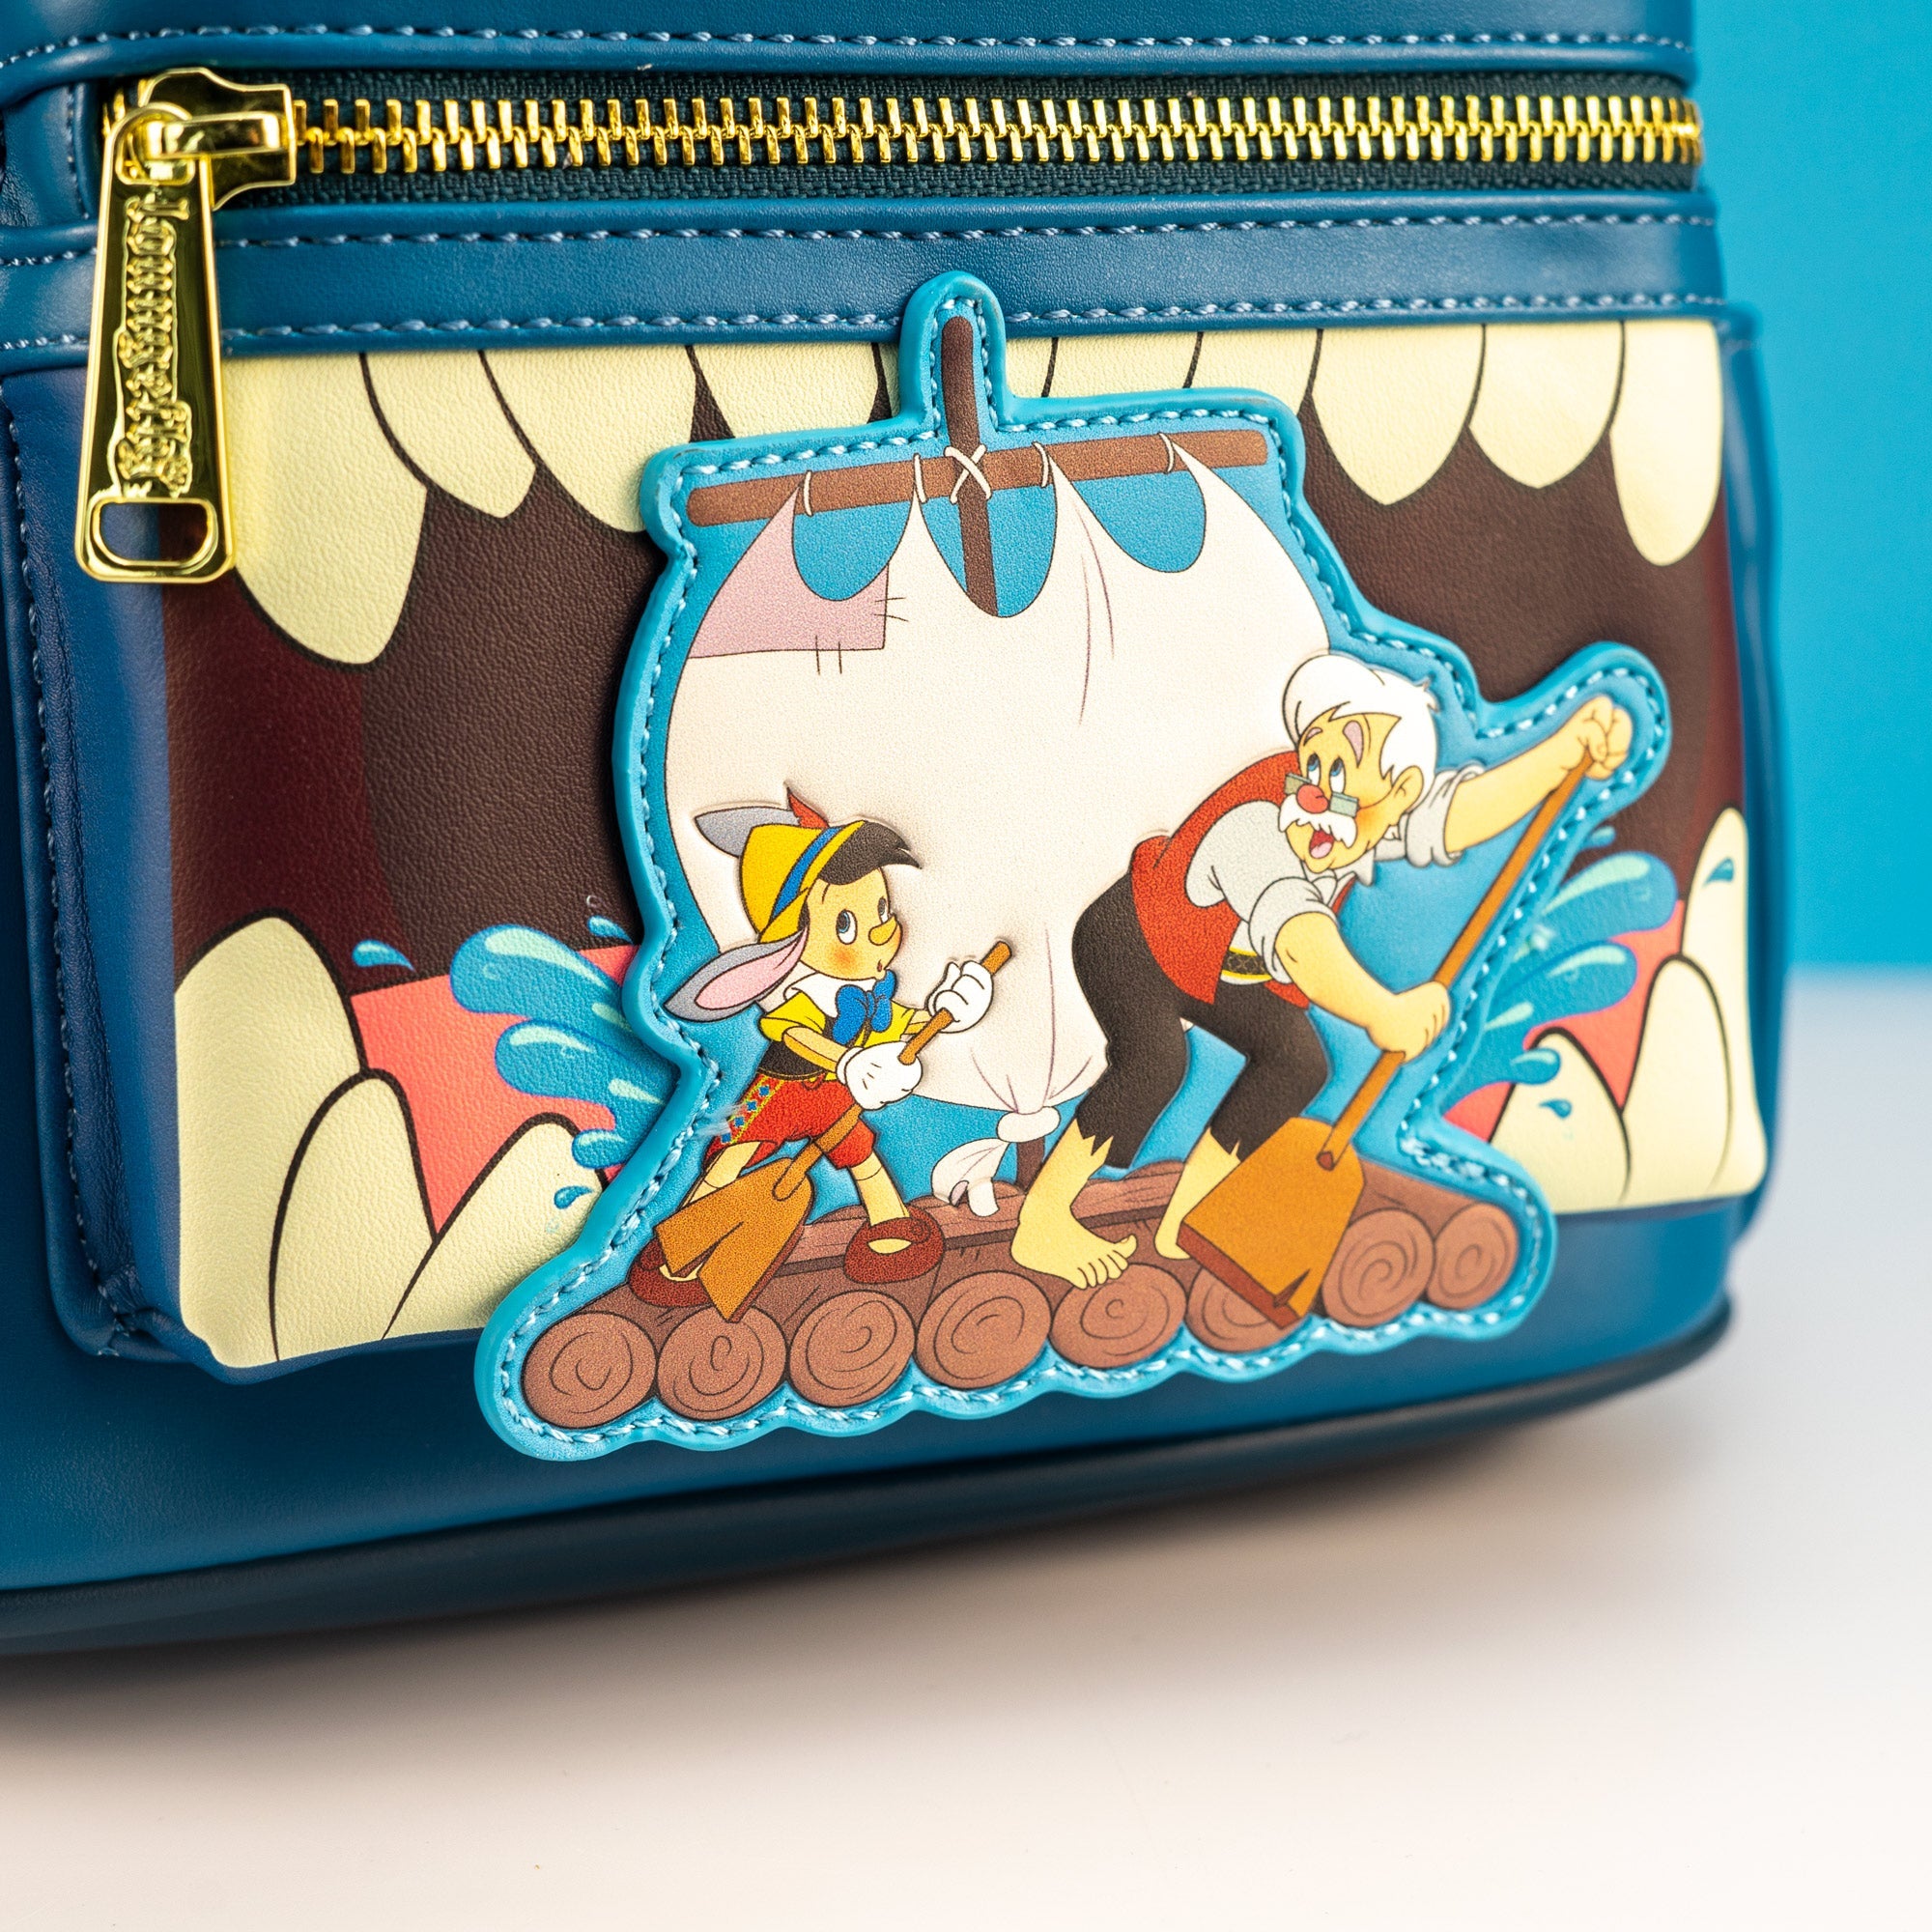 Loungefly x Disney Pinocchio Monstro Mini Backpack - GeekCore